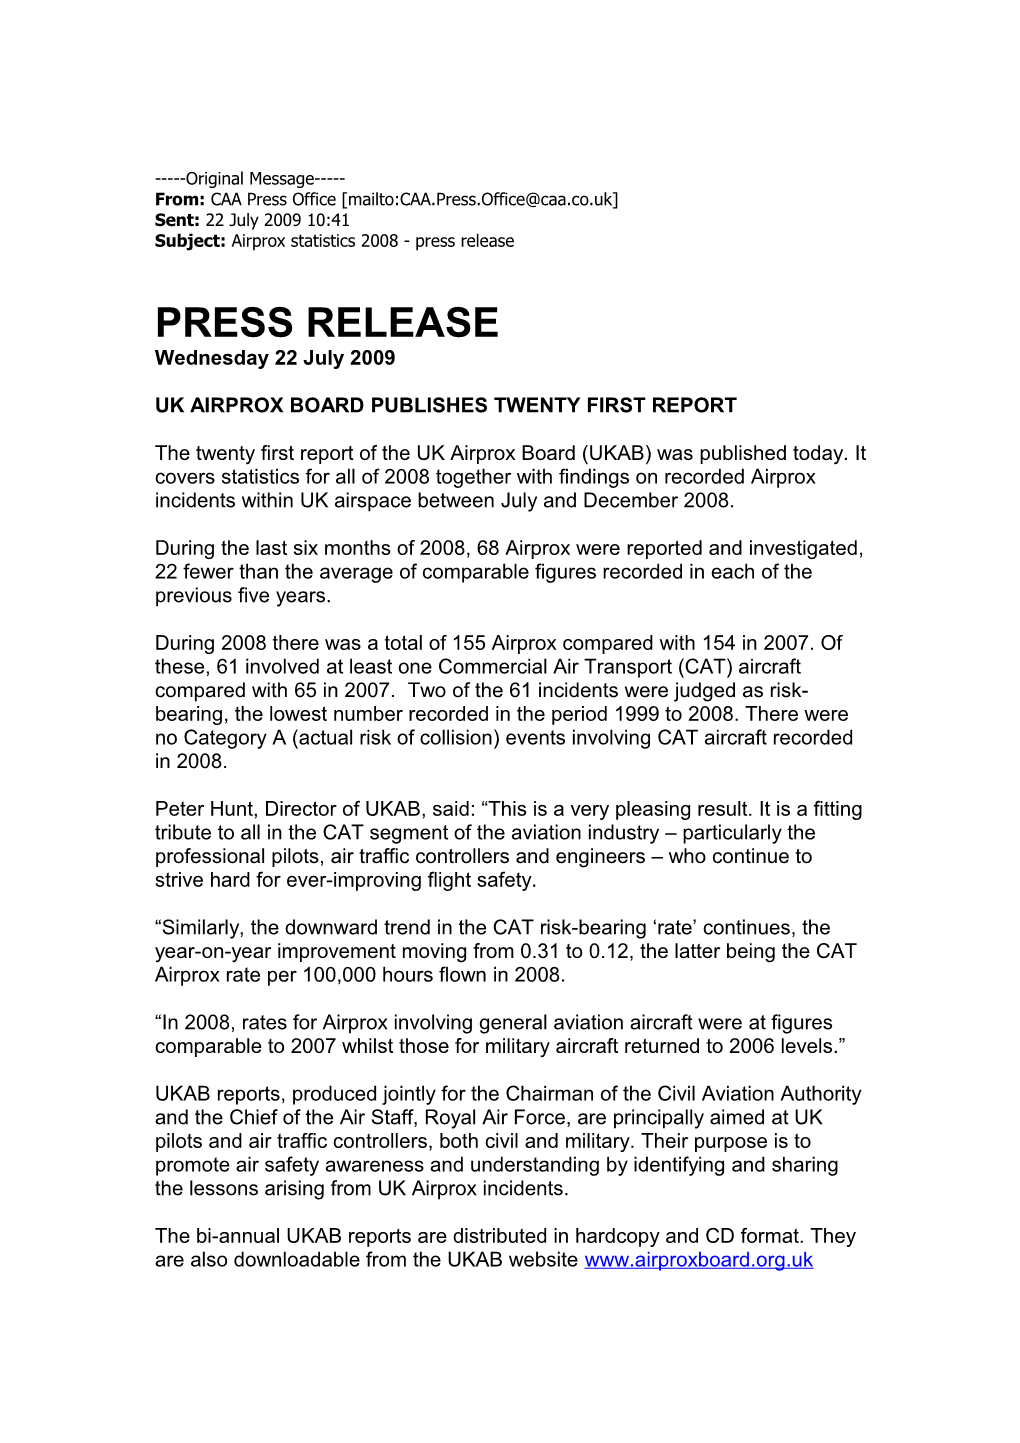 Airprox Statistics 2008 - Press Release